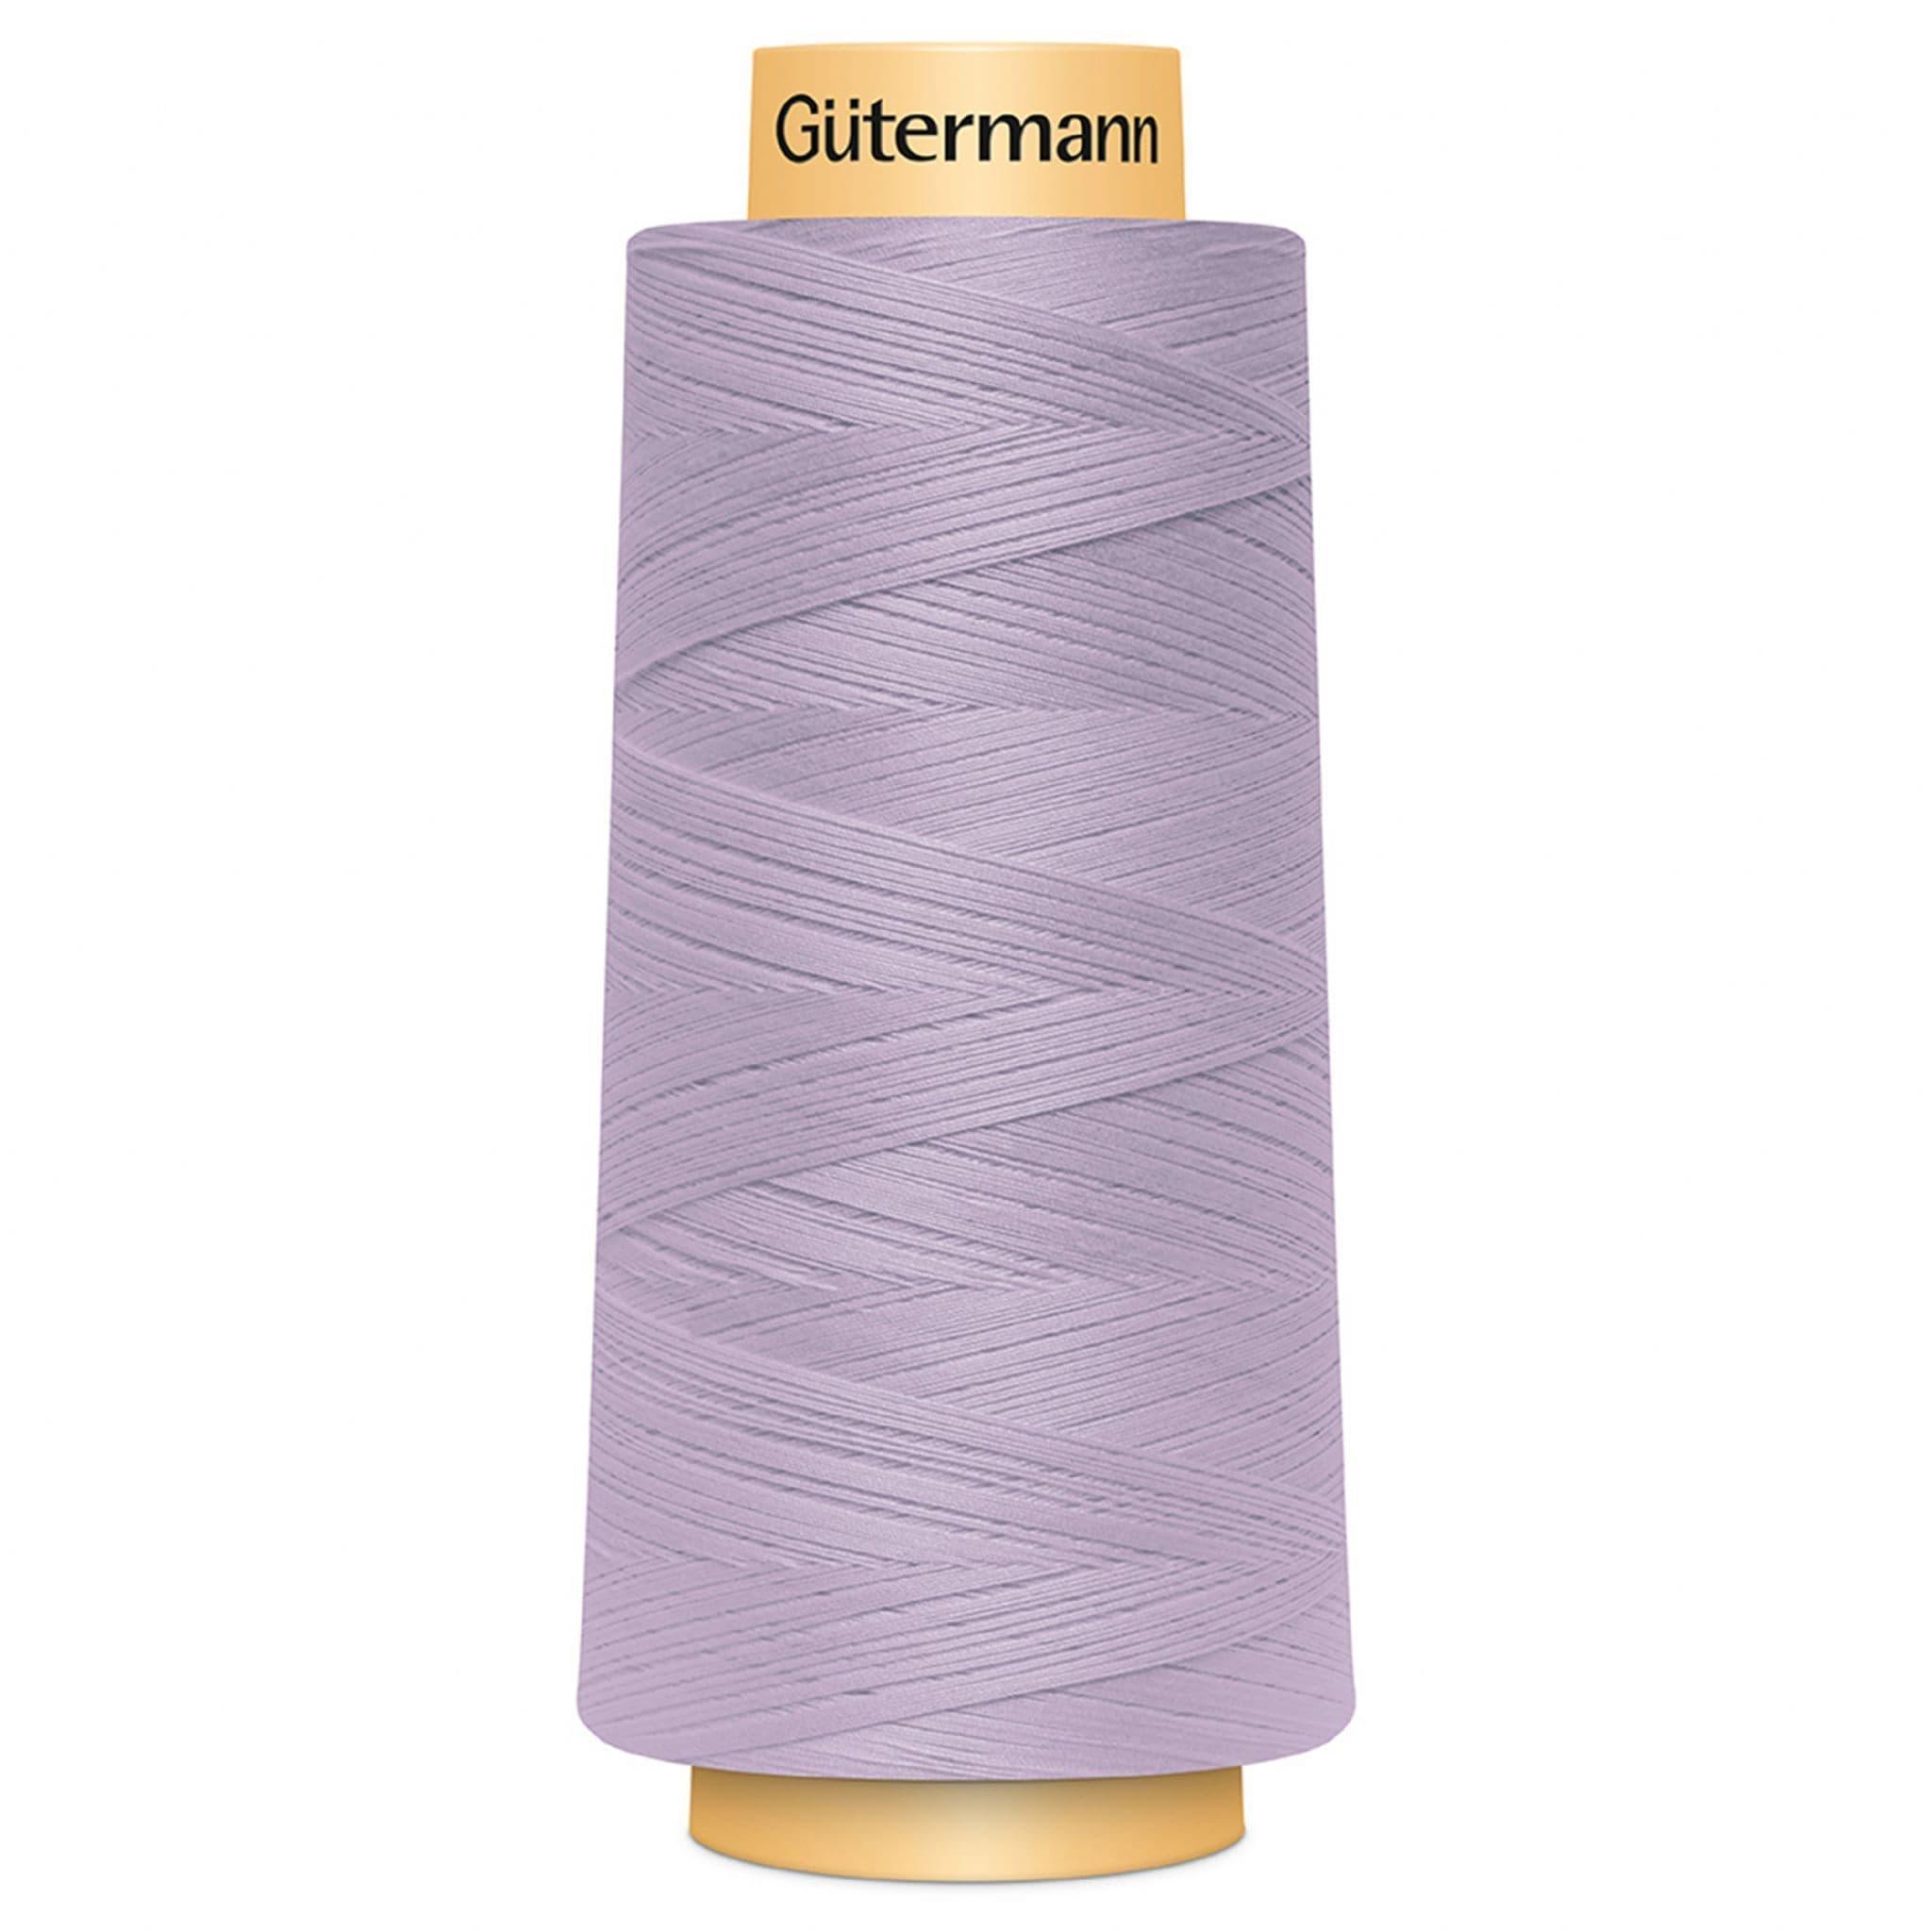 Gutermann Quilting Thread - Light Pearl